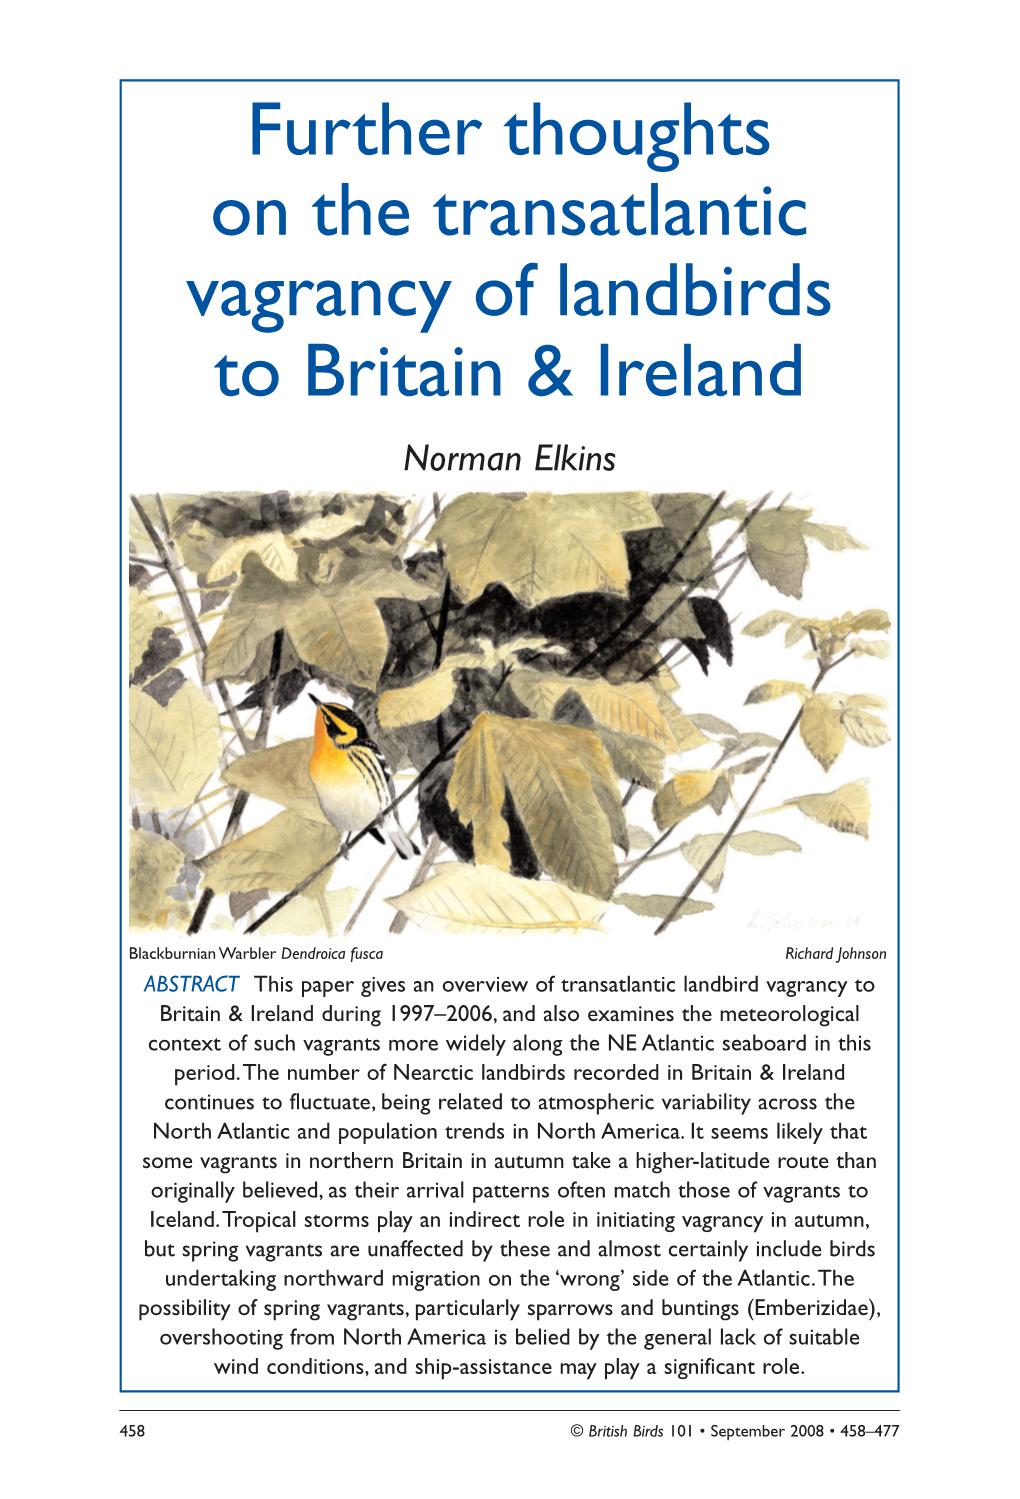 Further Thoughts on the Transatlantic Vagrancy of Landbirds to Britain & Ireland Norman Elkins